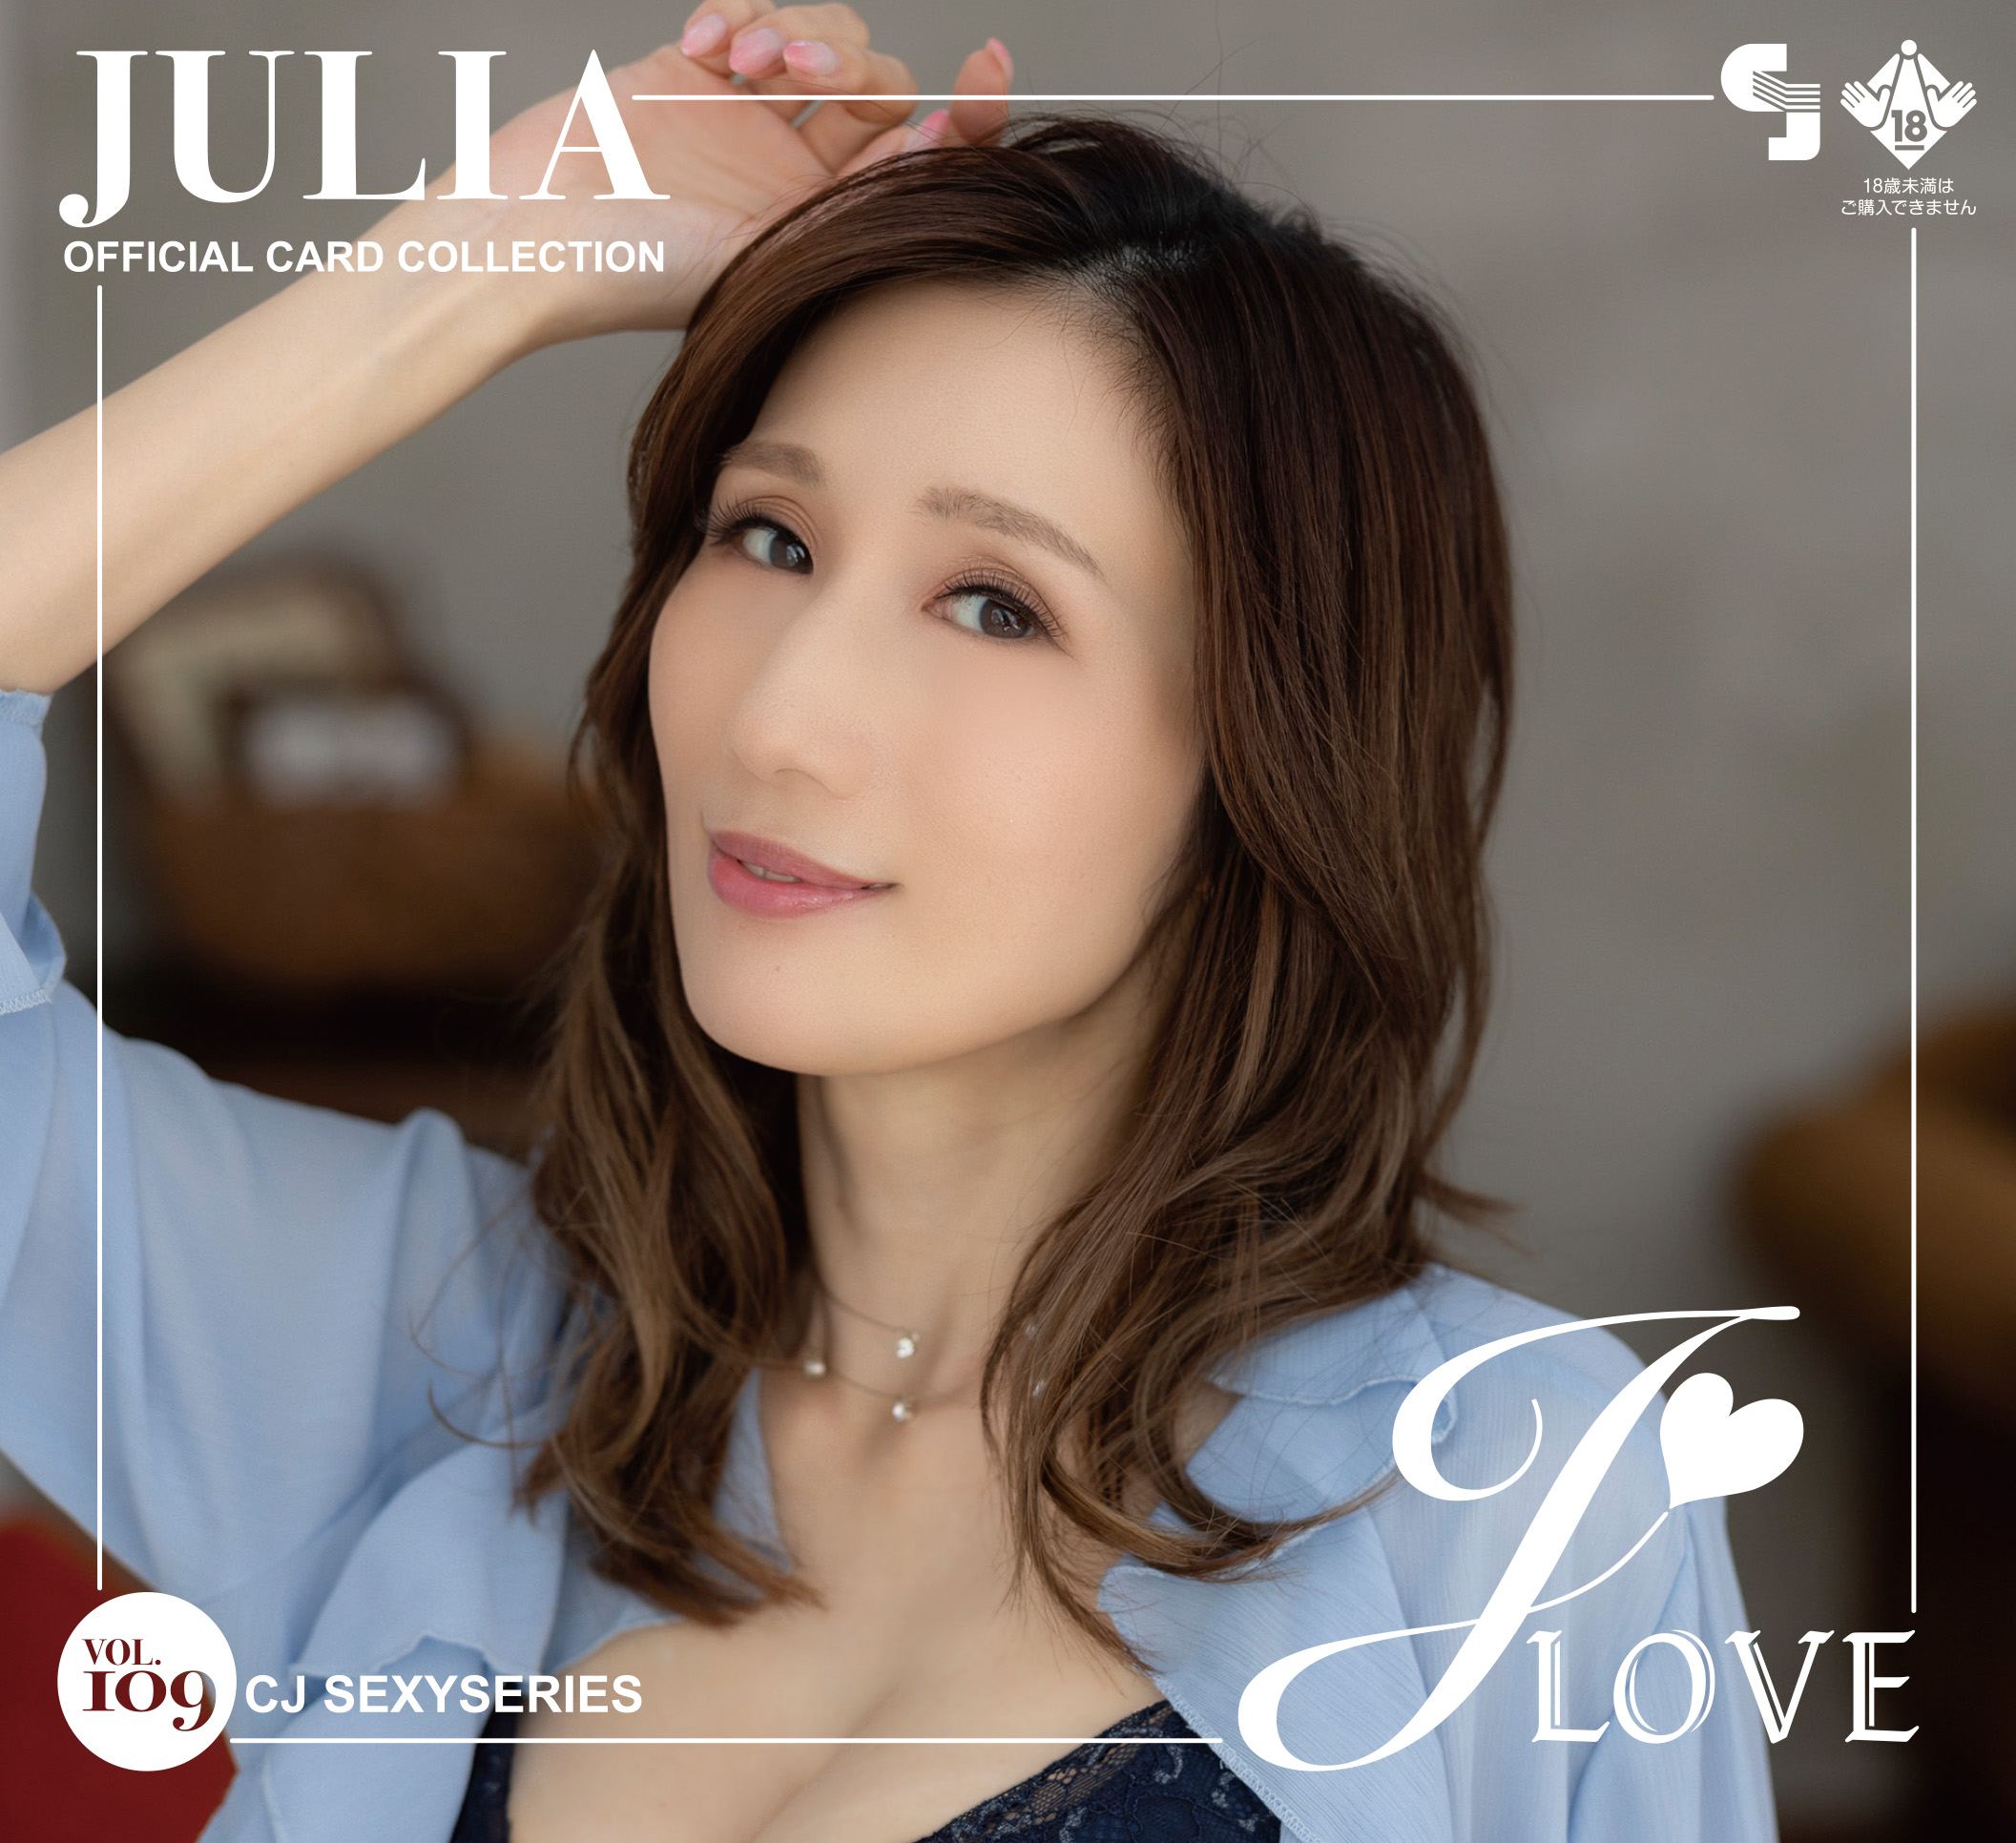 CJ Sexy Card Series Vol. 109 Julia Official Card Collection -J Love- (Set of 12 Packs) Jyutoku